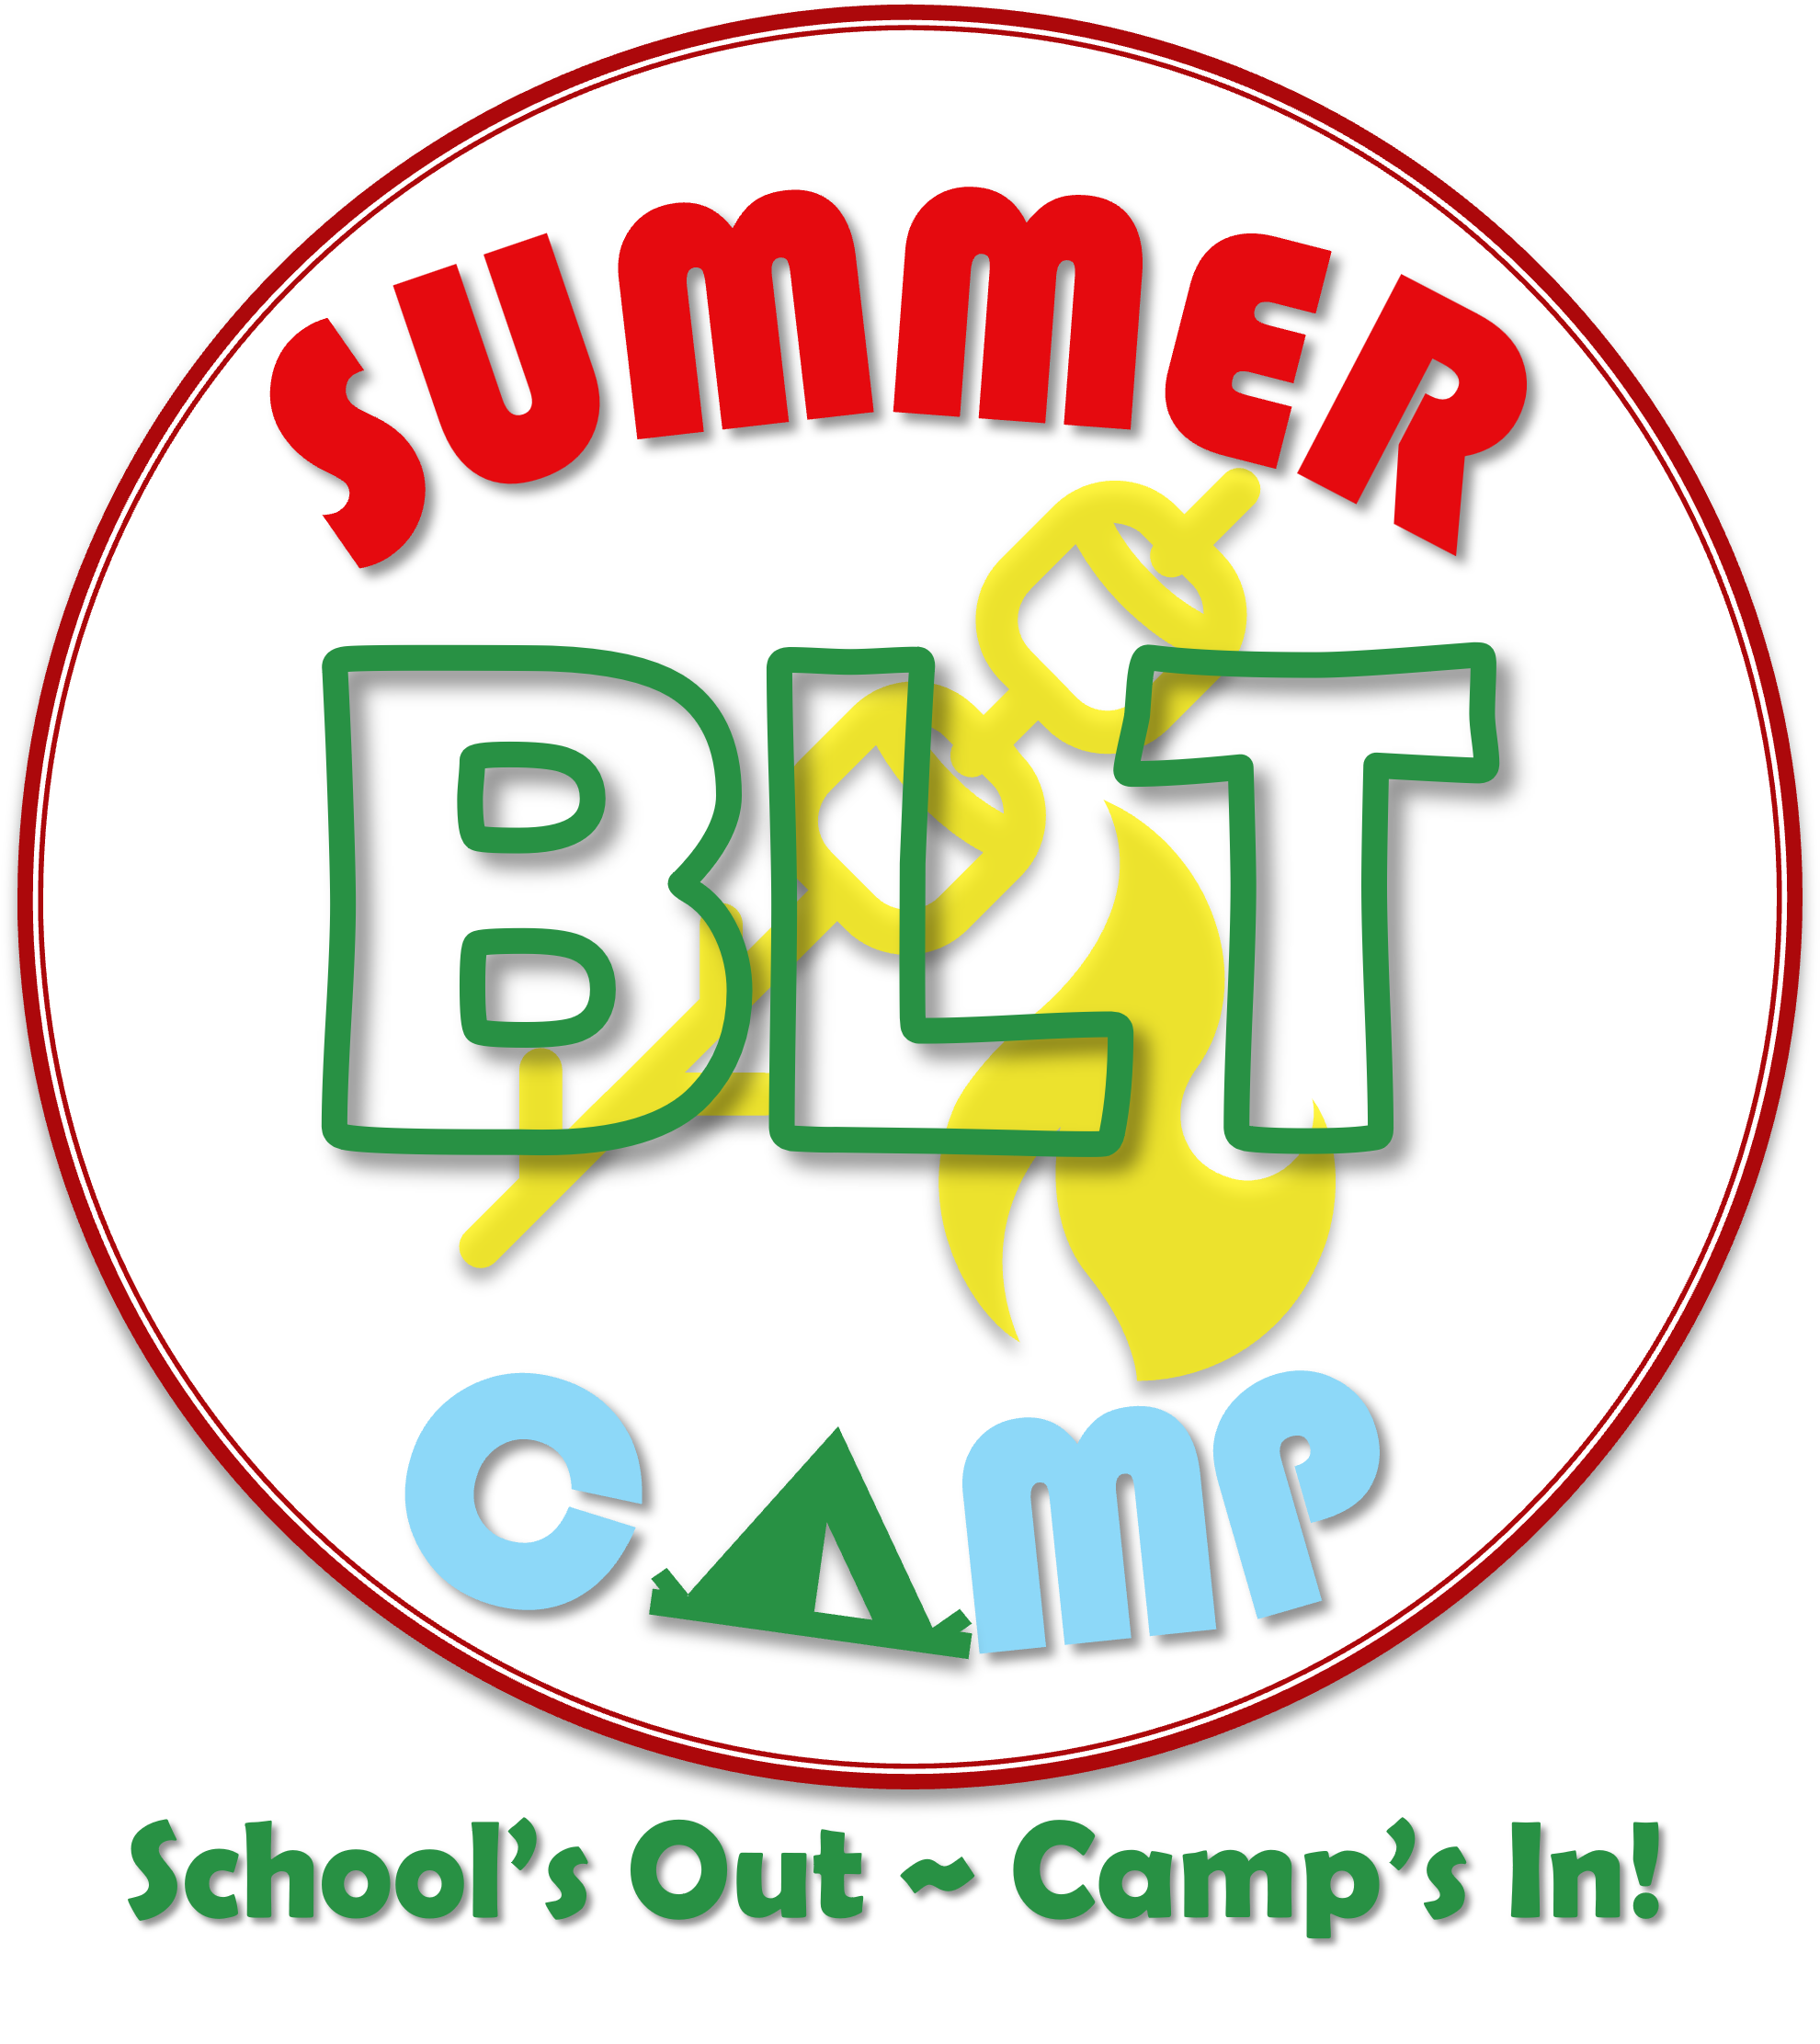 blt camp logo